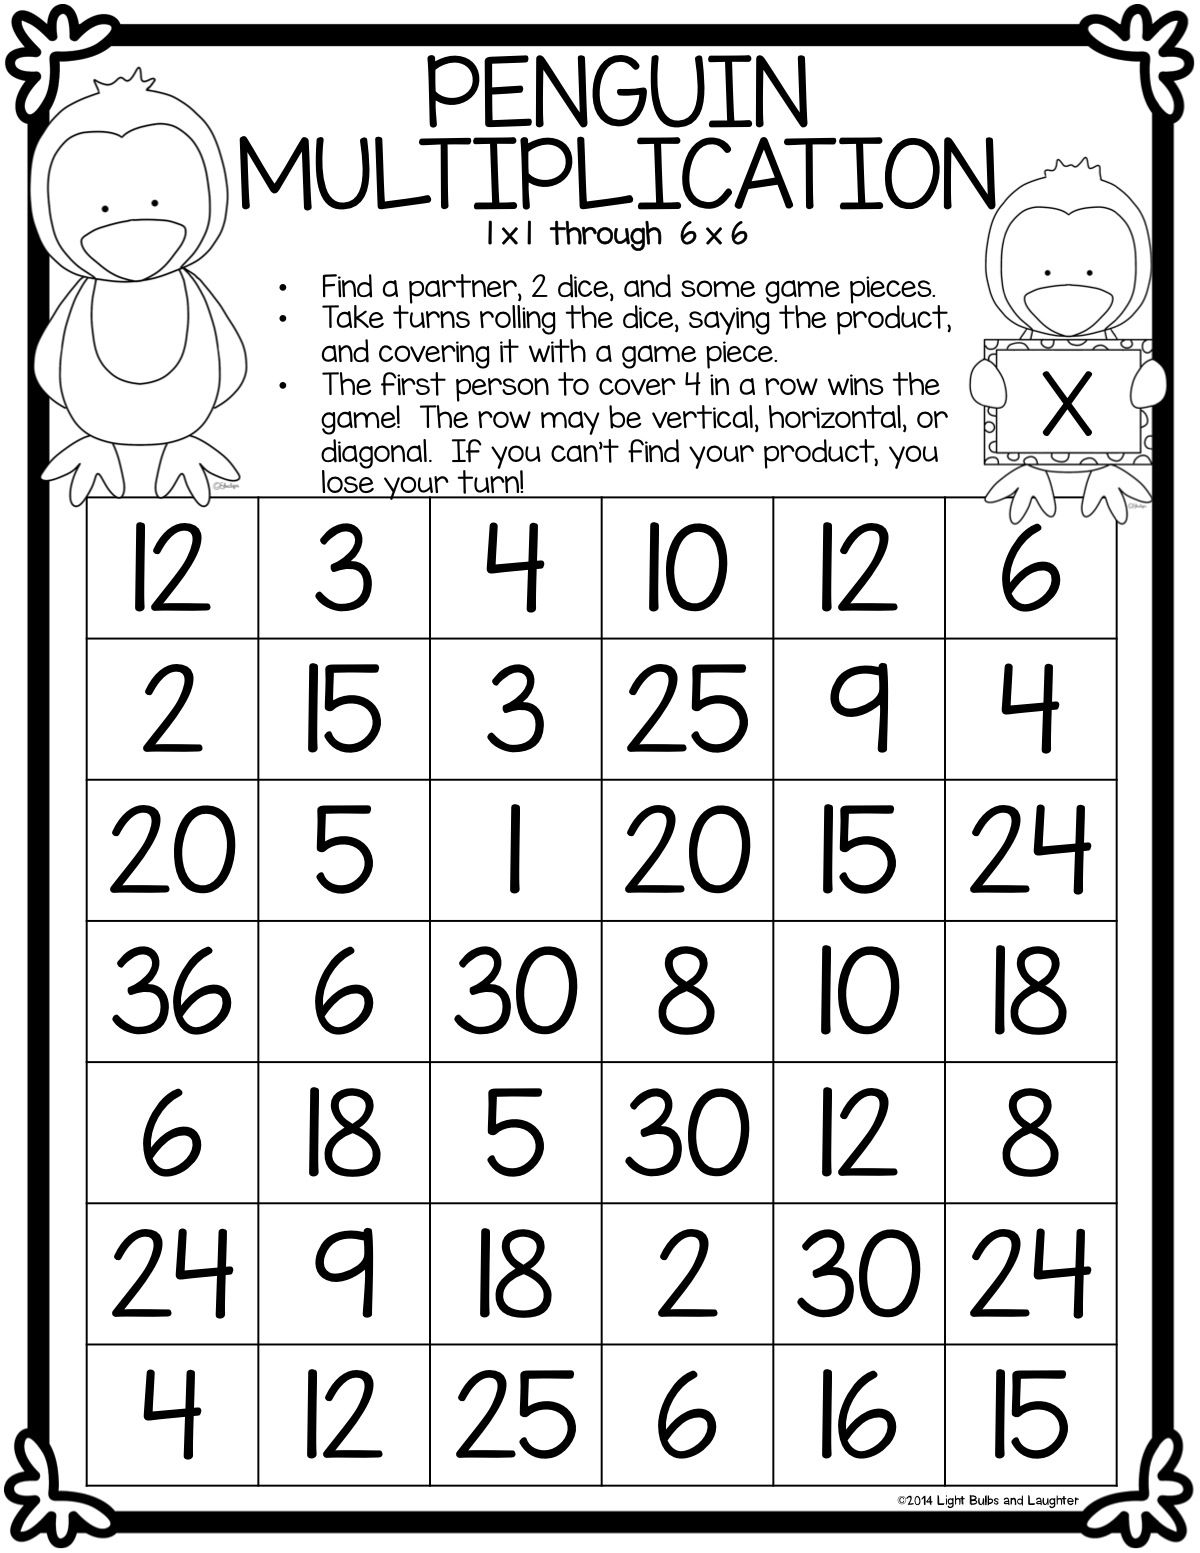 second-grade-multiplication-worksheets-multiplication-teaching-multiplication-learning-math